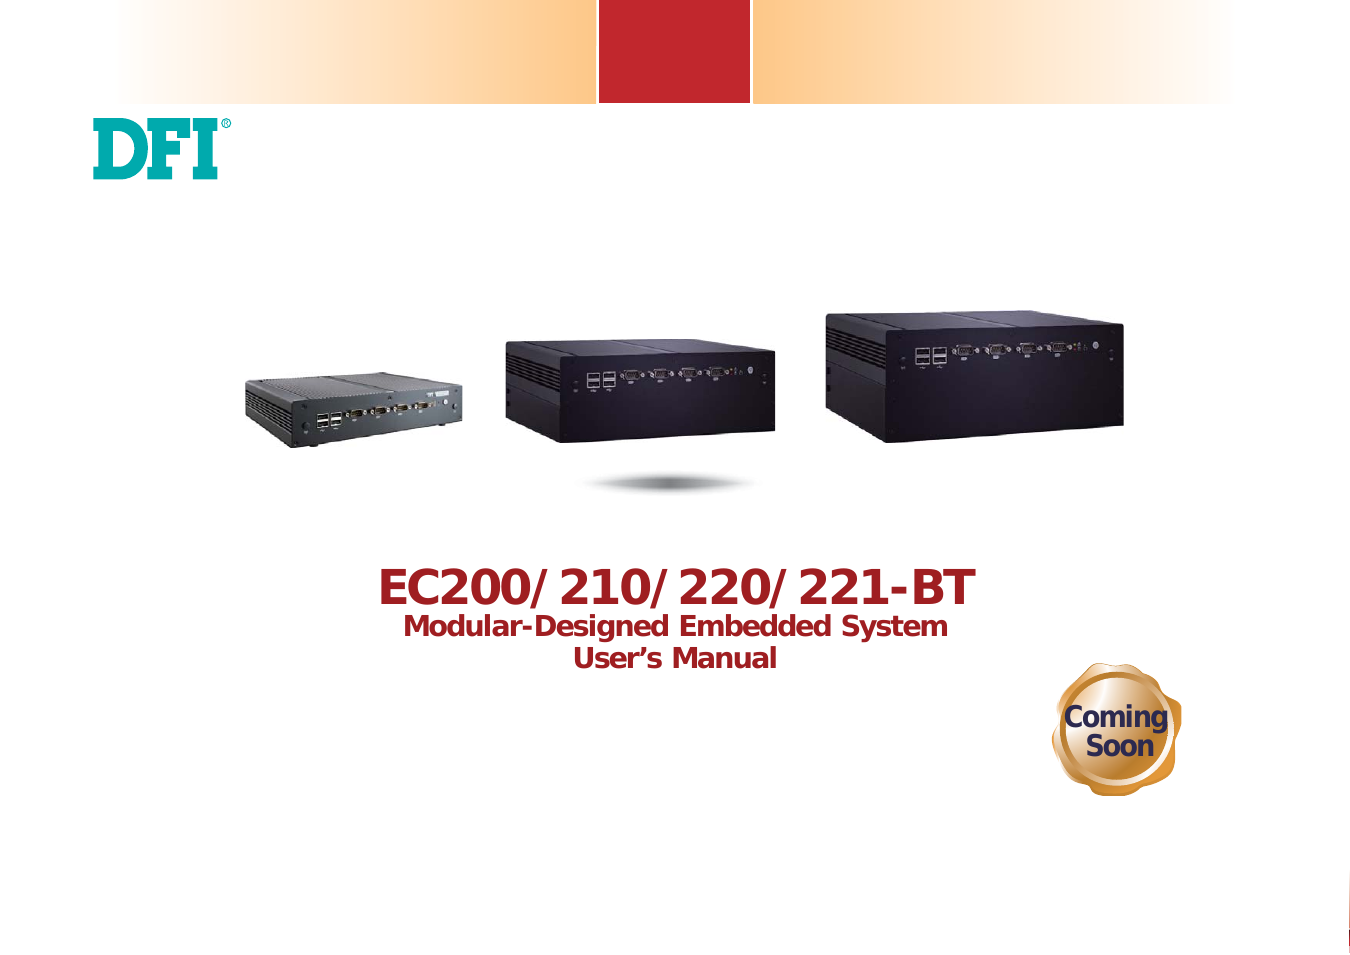 EC220-BT Series